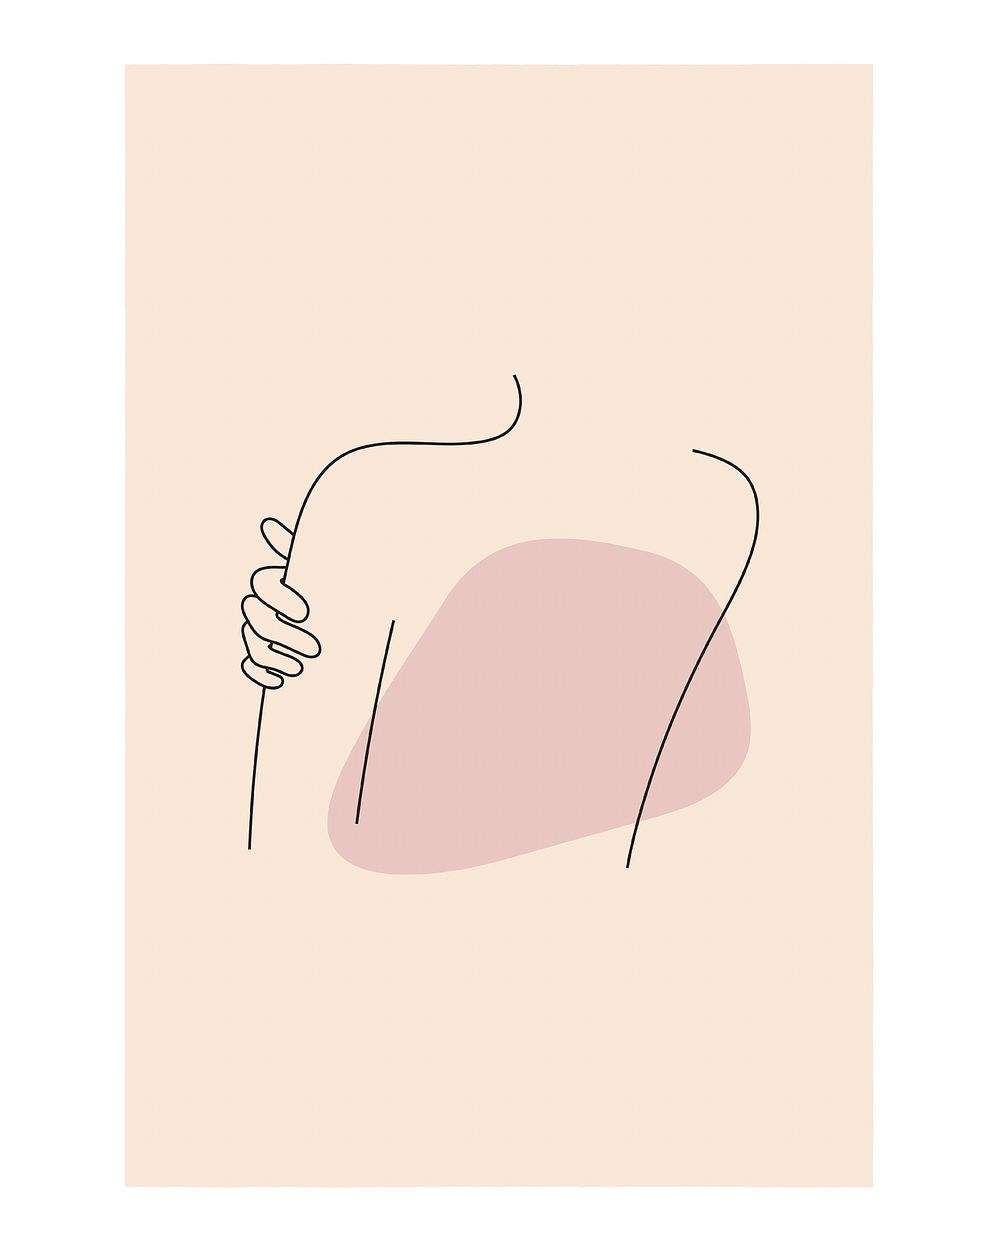 Woman line art poster, minimal hand drawn illustration